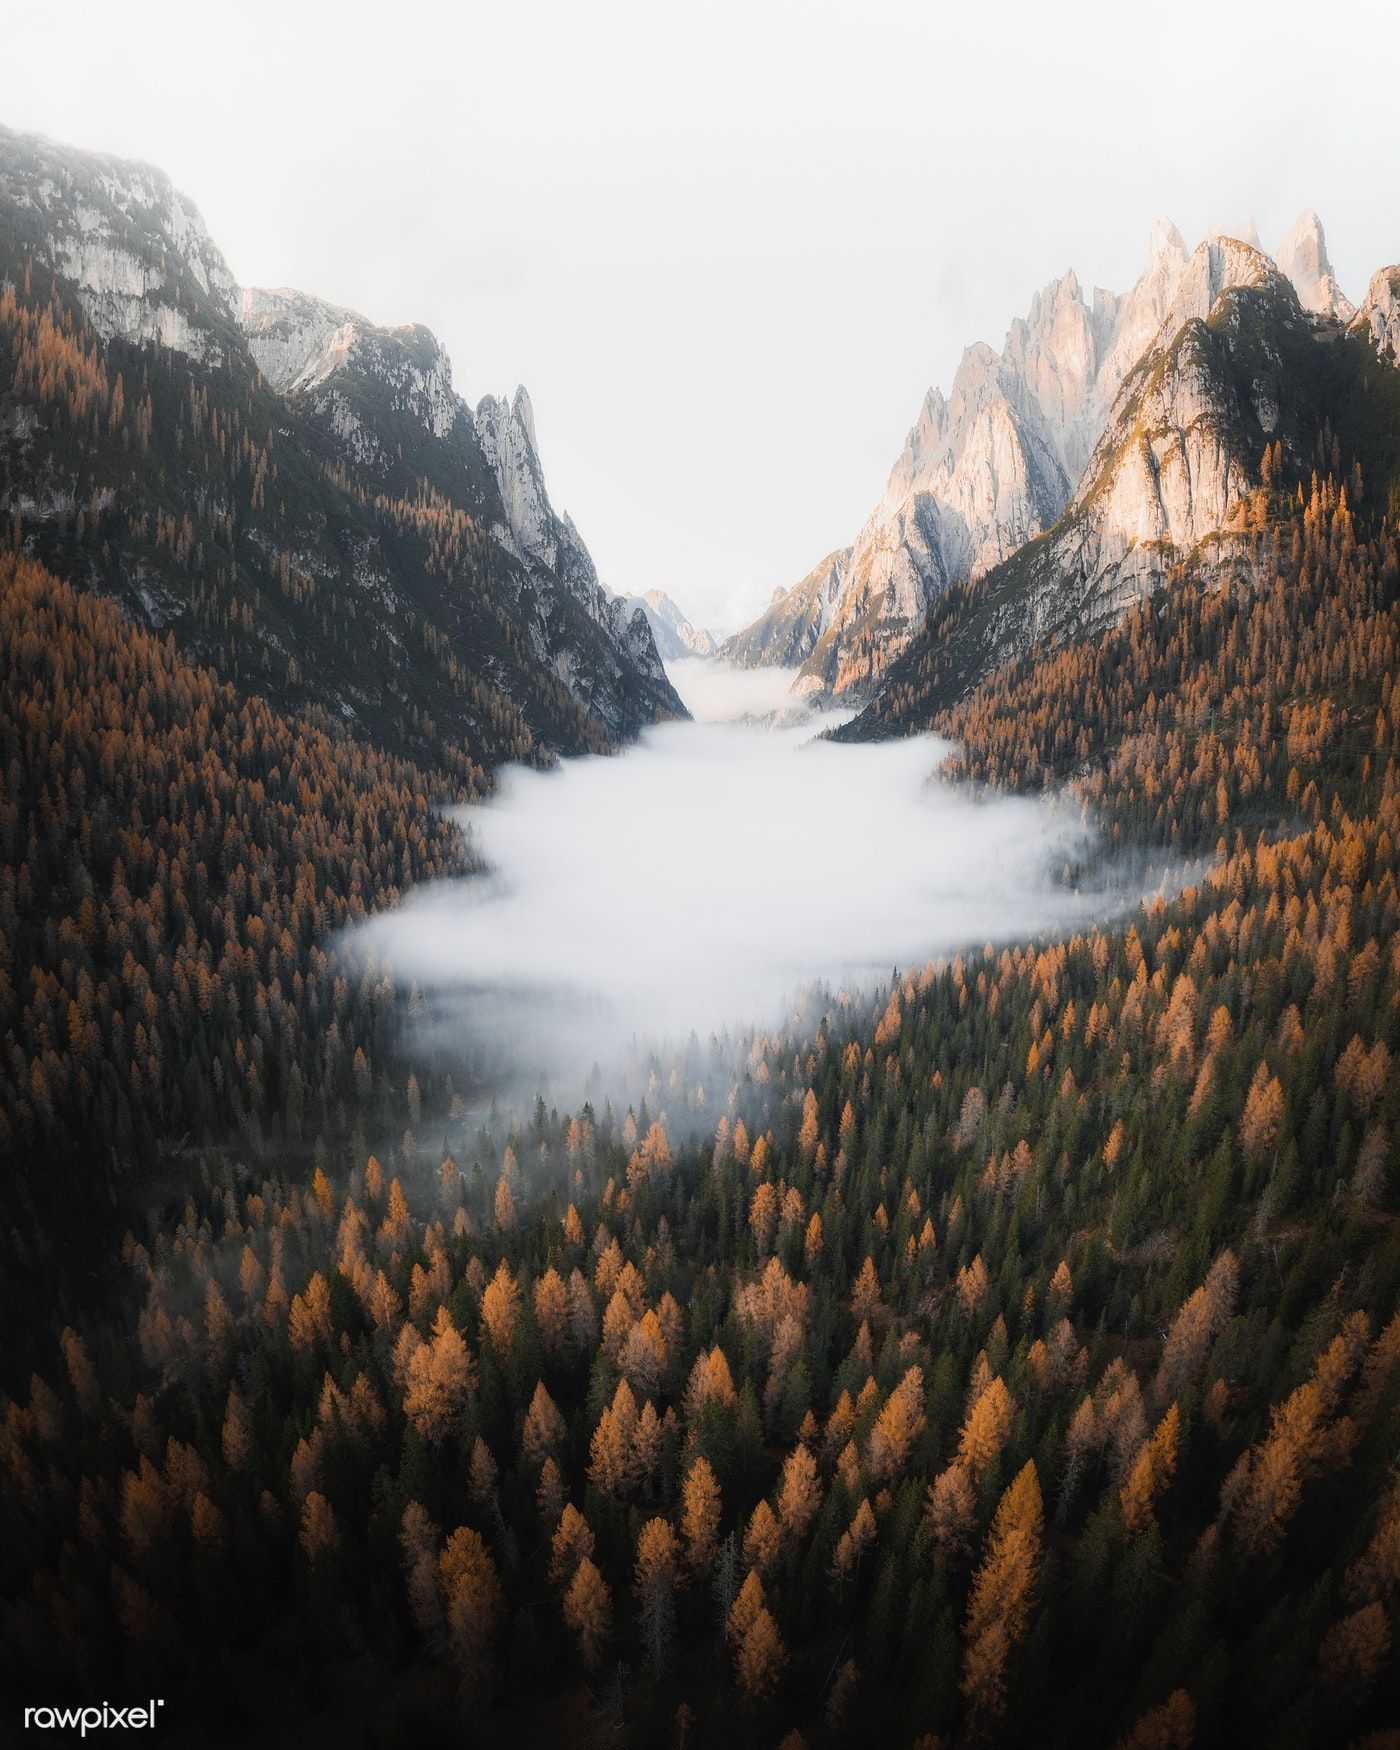 Download premium photo of Dolomites mountain range in Italy 2047696 ในปี 2020